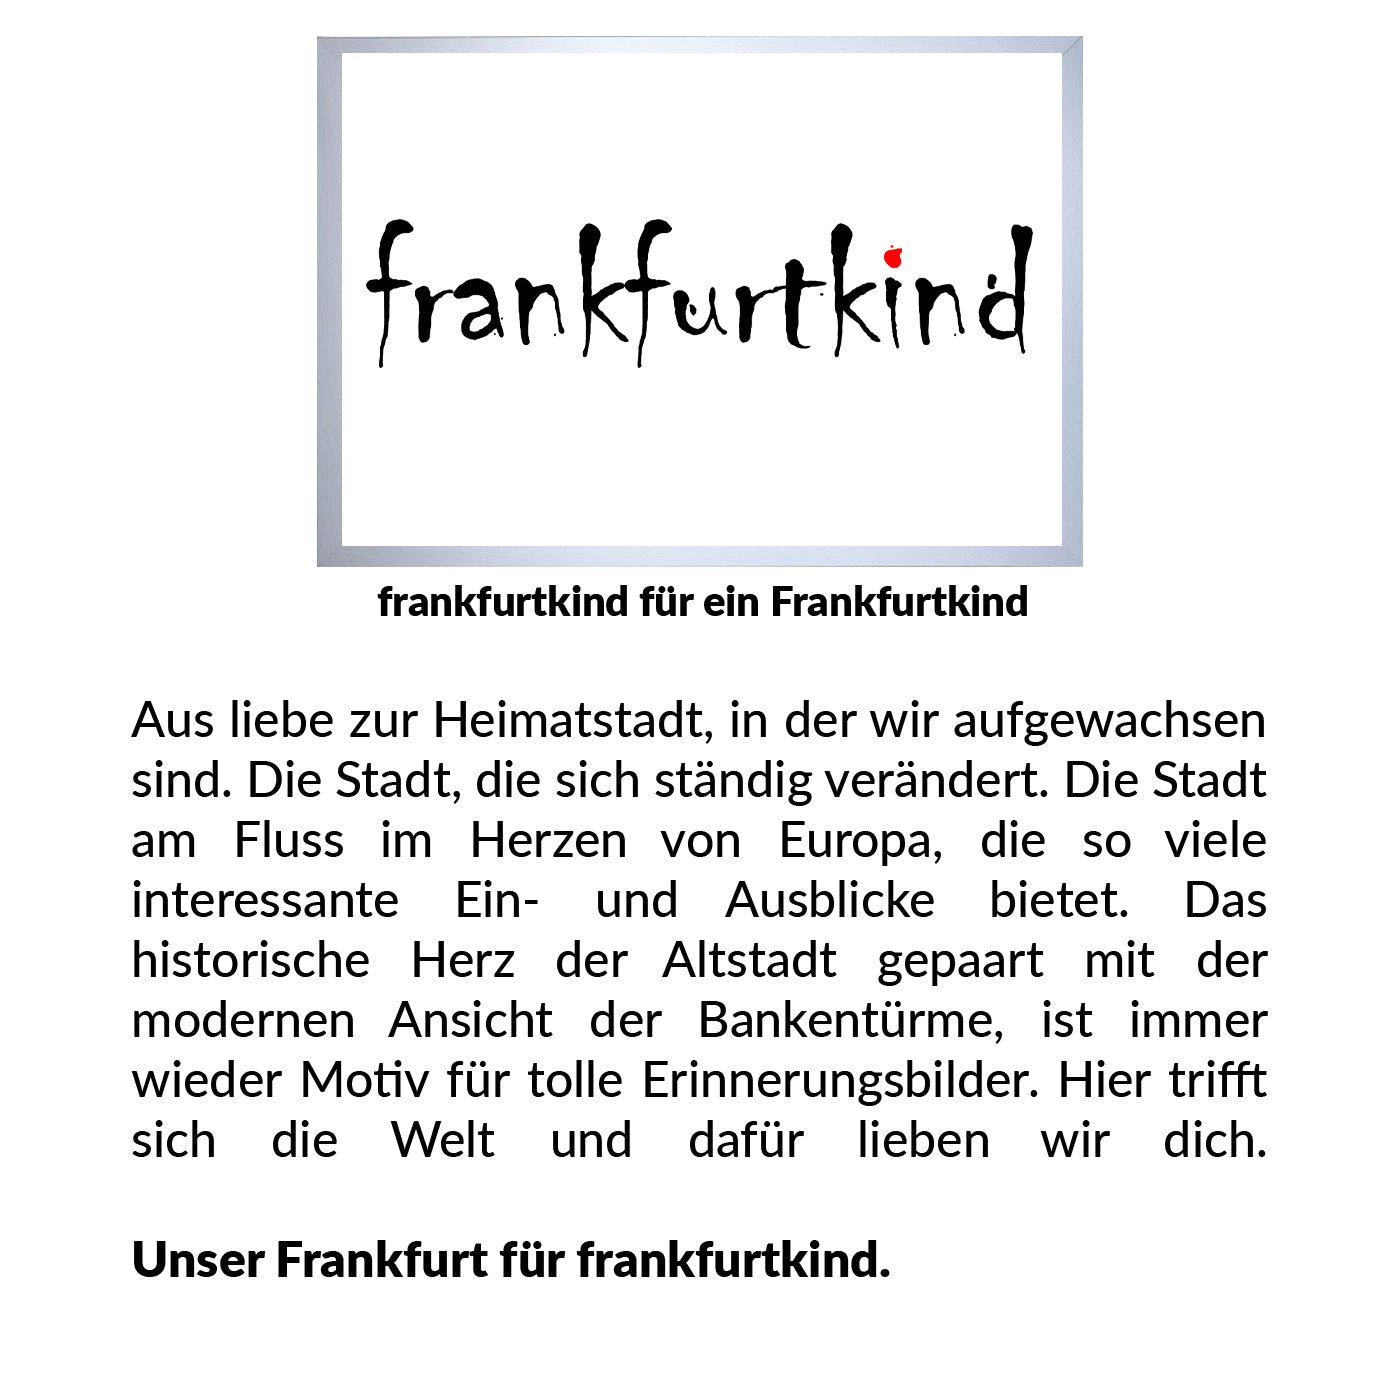 frankfurtkind | T-Shirt regular unisex